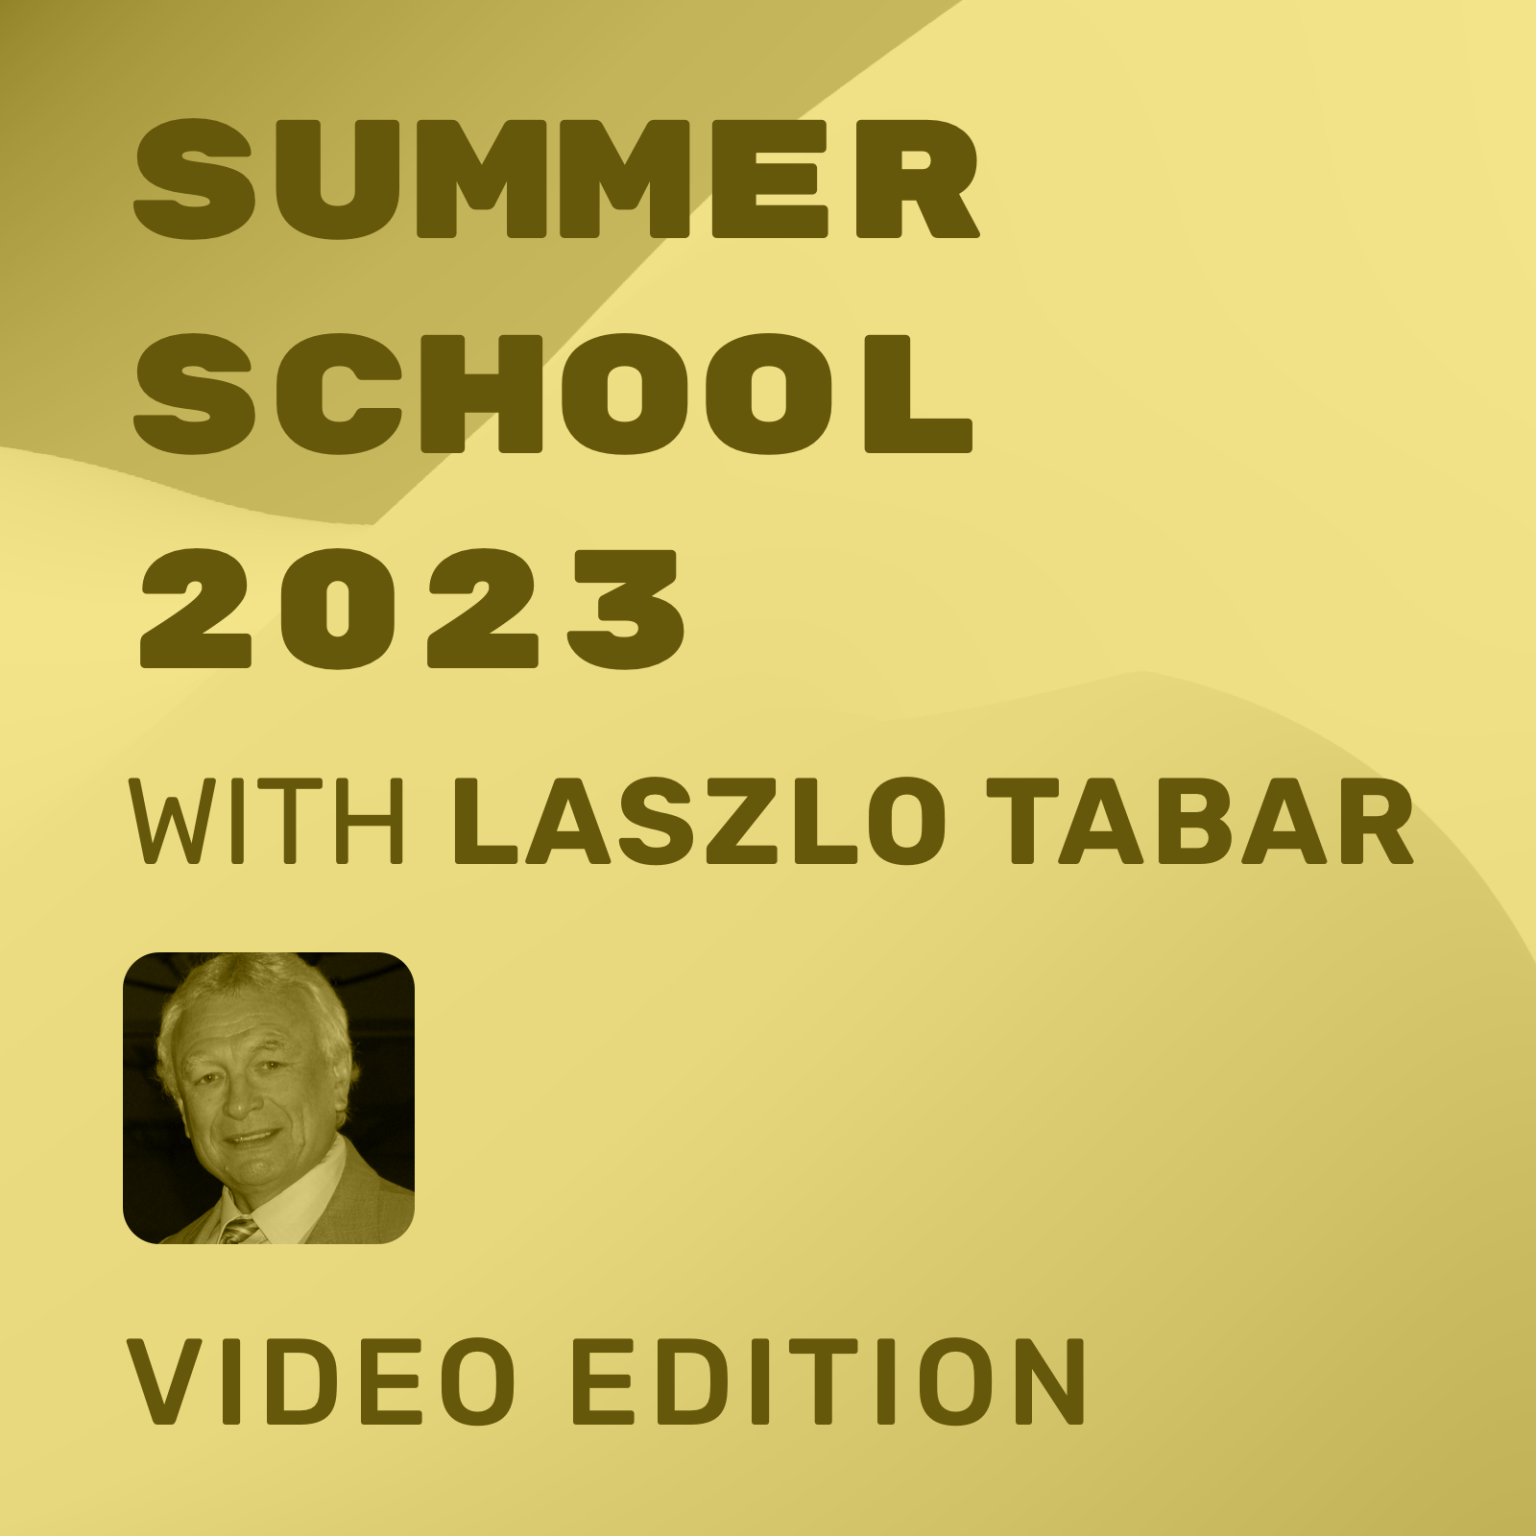 School Of Radiology Summerschool 2023 Video Course 1536x1536 